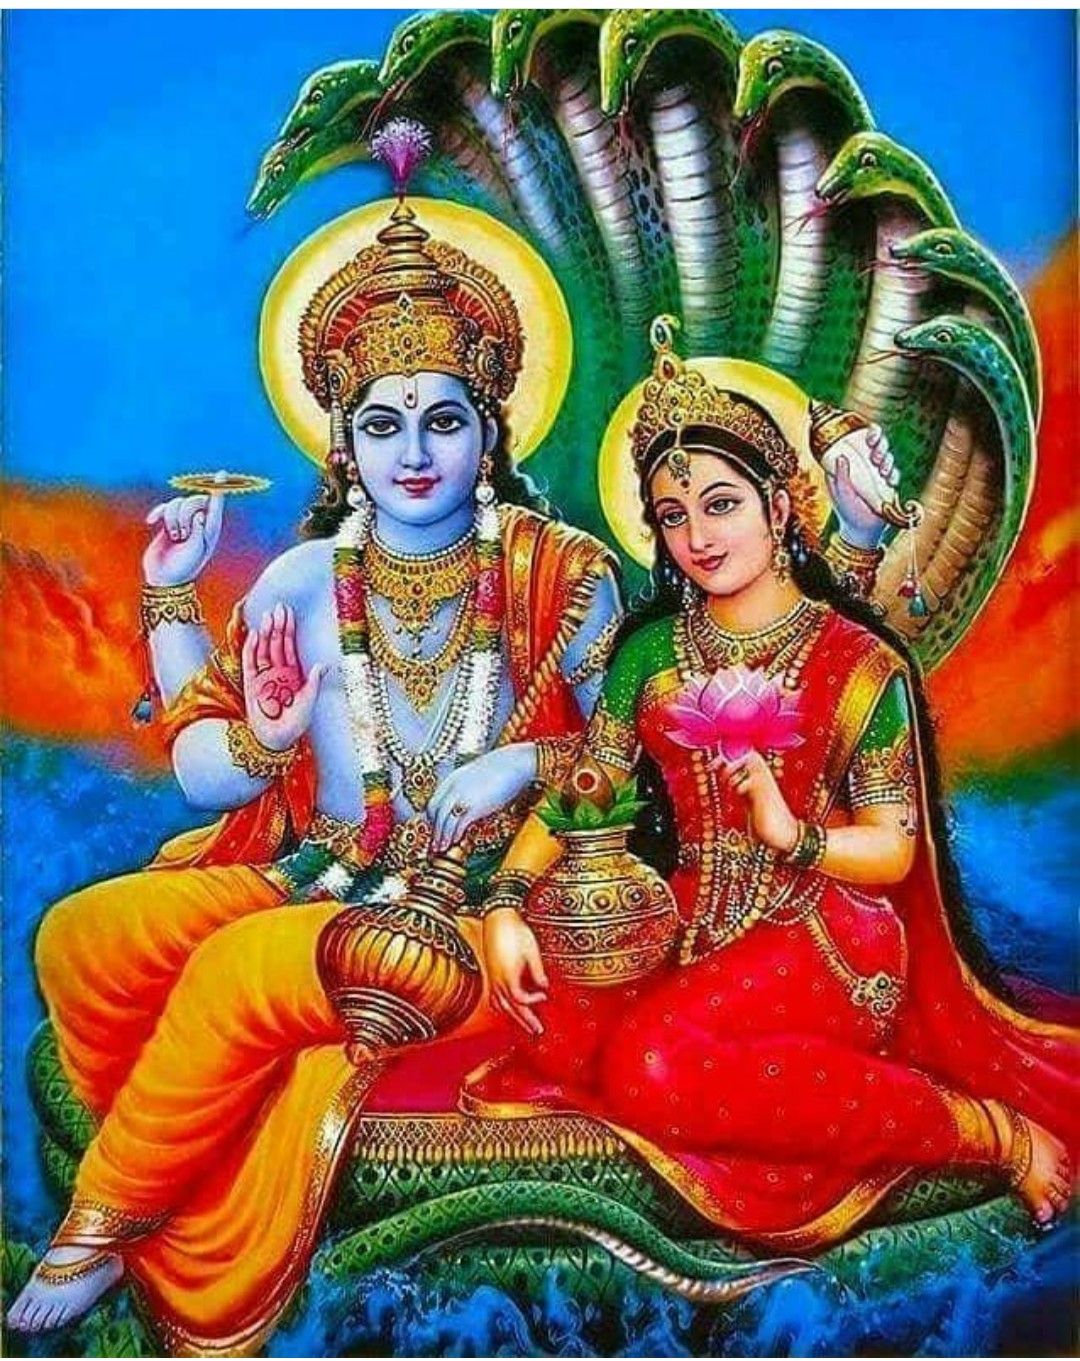 Beautiful Vishnu Laxmi Images | Images of Lord Vishnu and ...